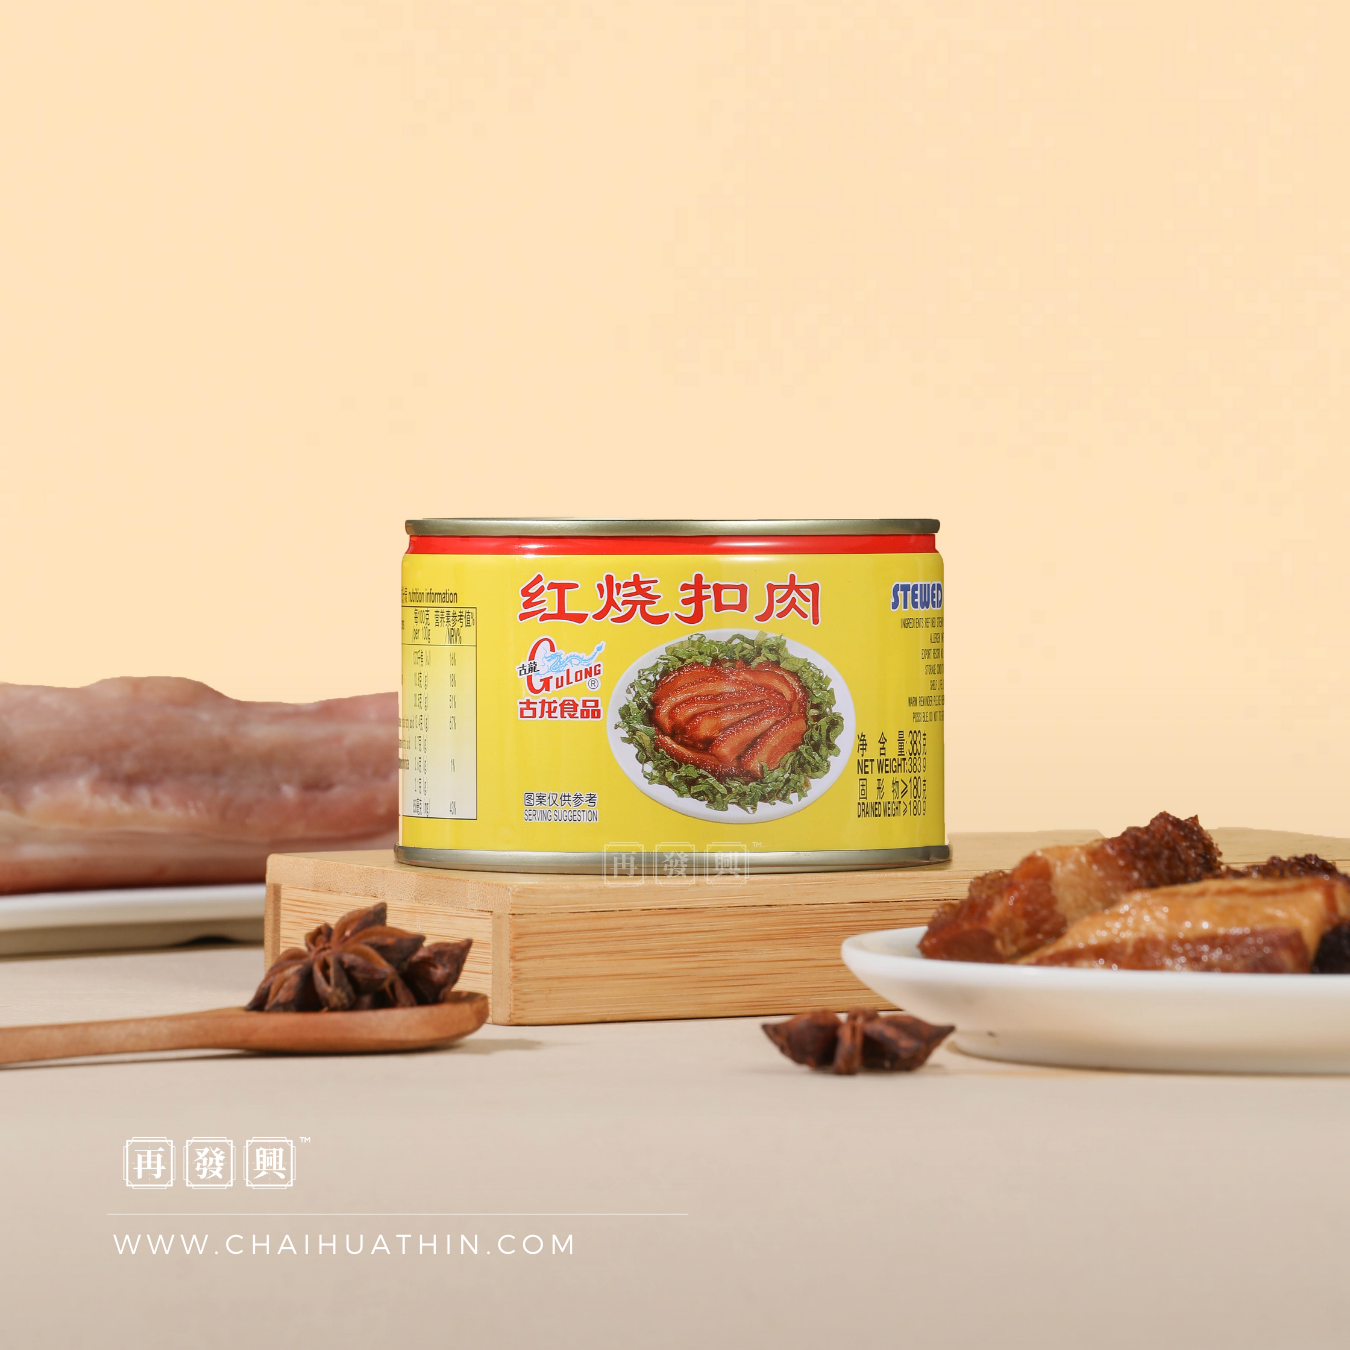 GuLong Stewed Pork Slice 古龙红烧扣肉 (L / 大) 383g